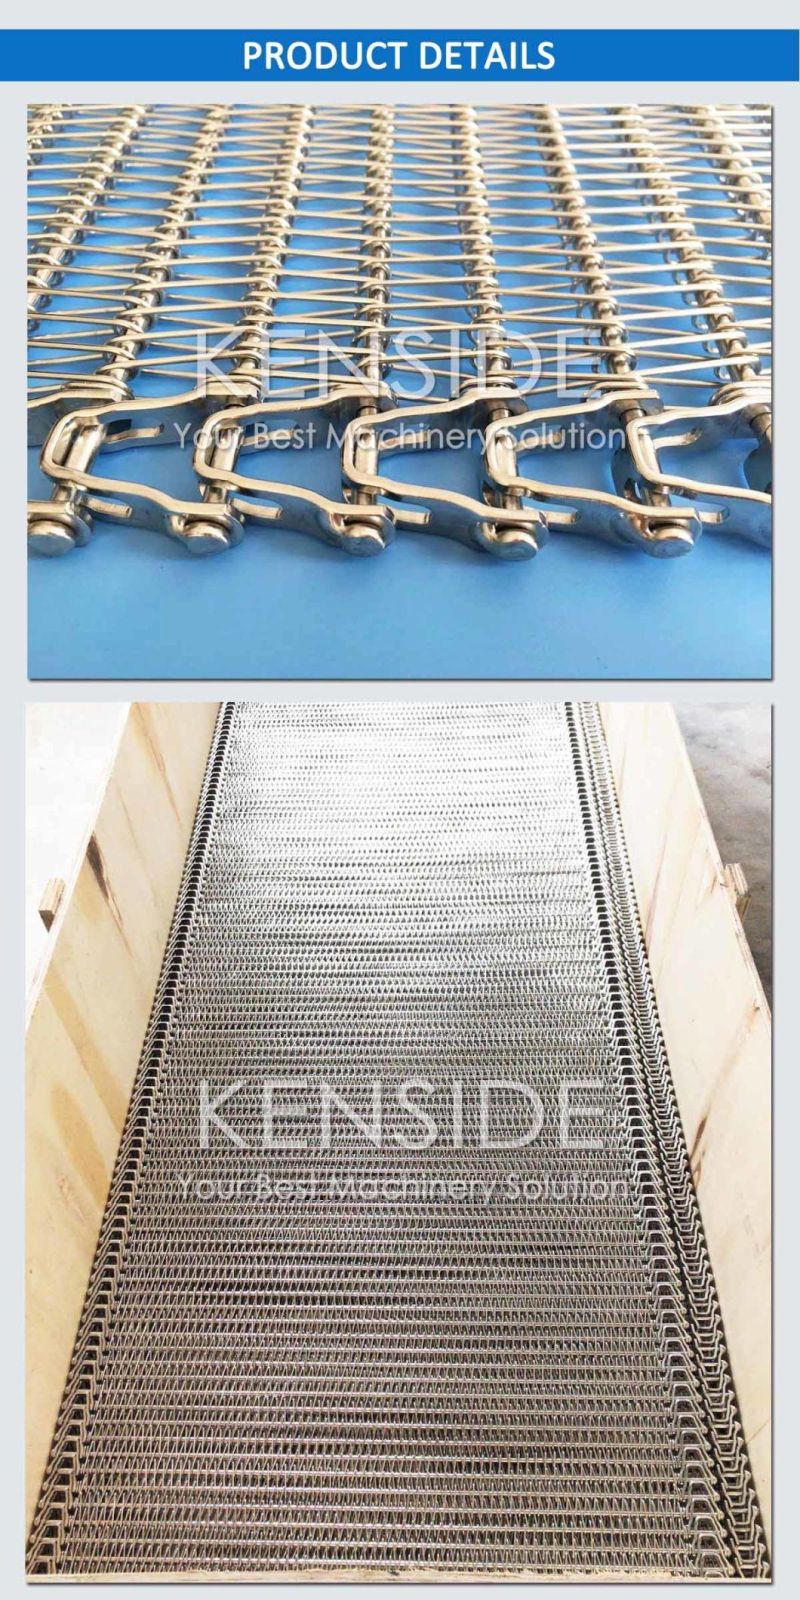 Stainless Steel Belting Spiral Conveyor Belts Reduced Radius Belts for Baking Industry